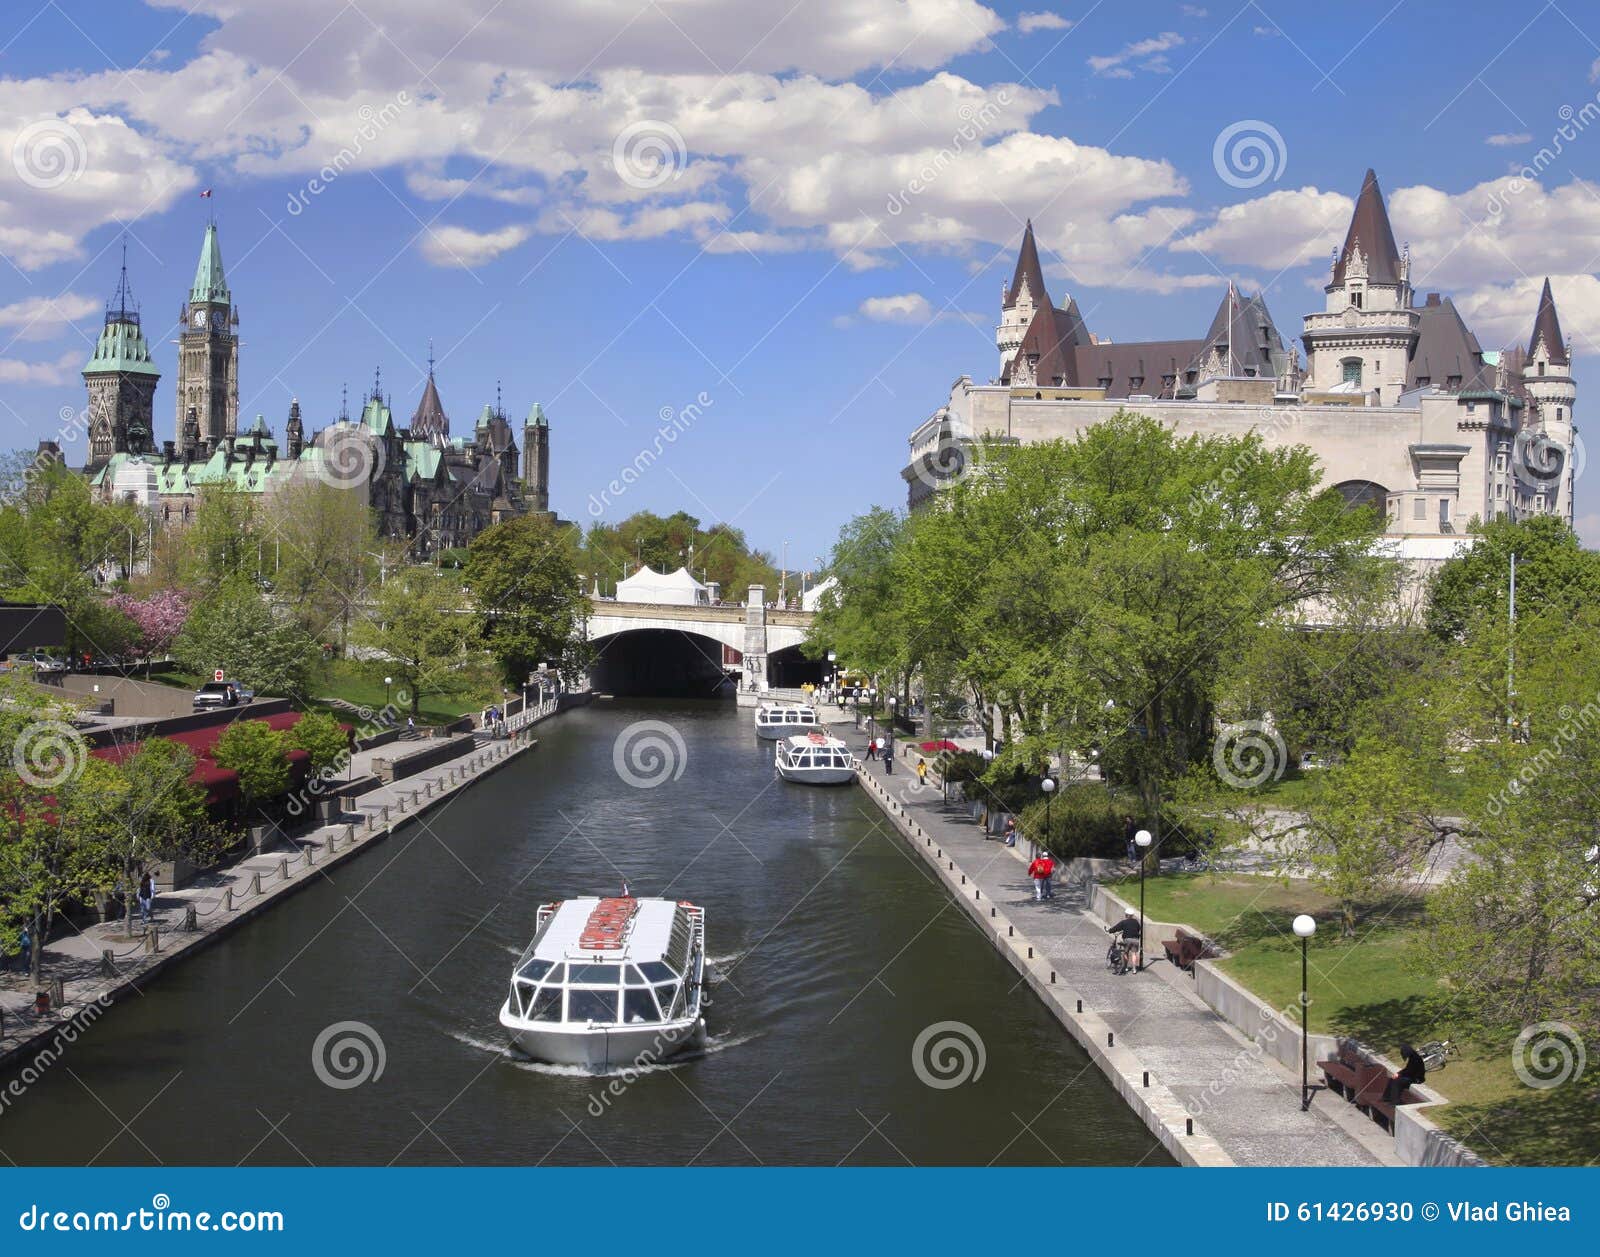 rideau canal, the parliament of canada, ottawa